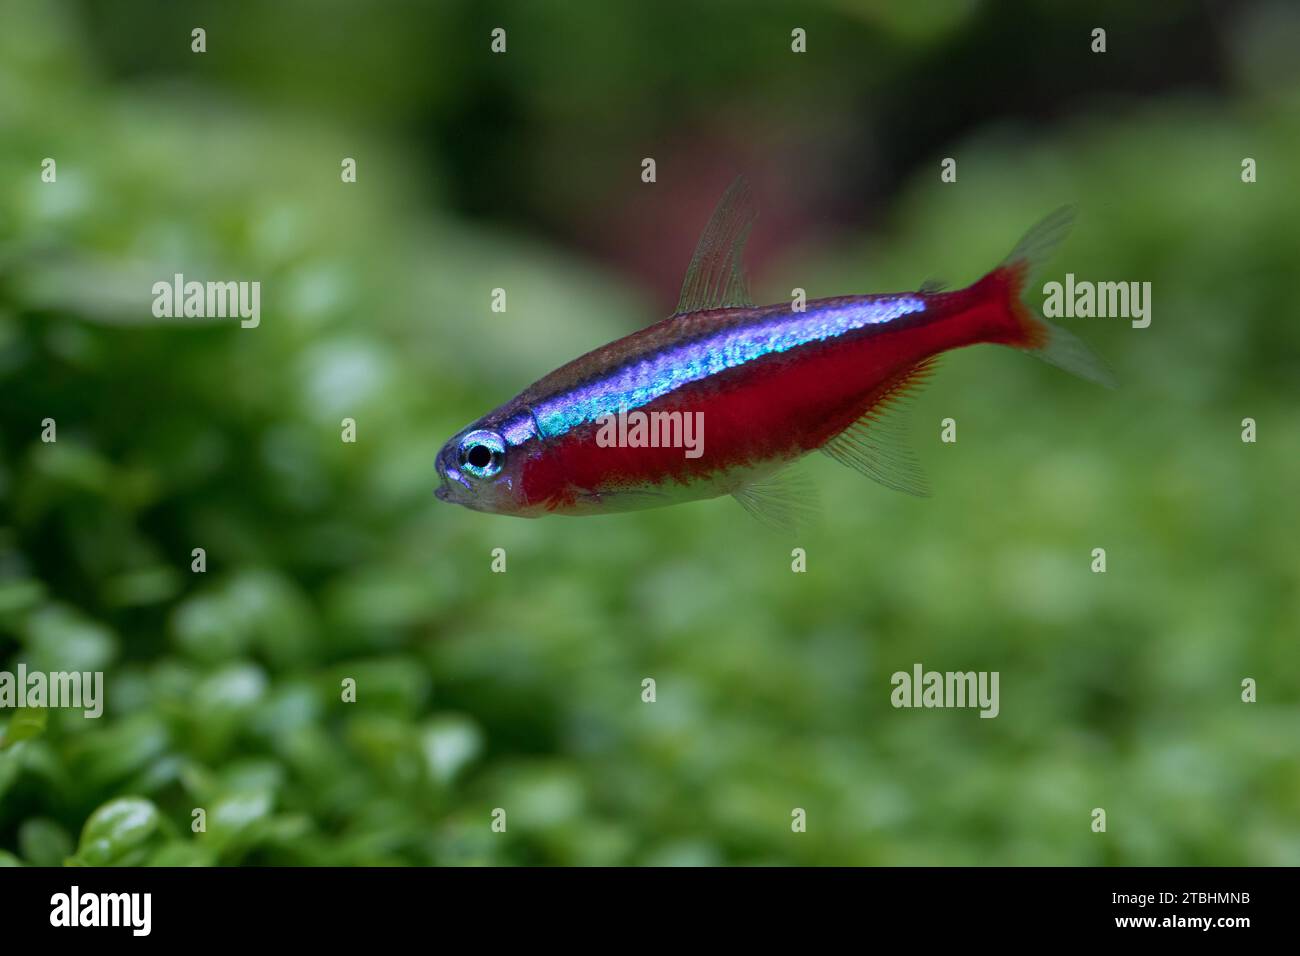 Closeup of cardinal tetra fish in aquarium with green plant background Stock Photo